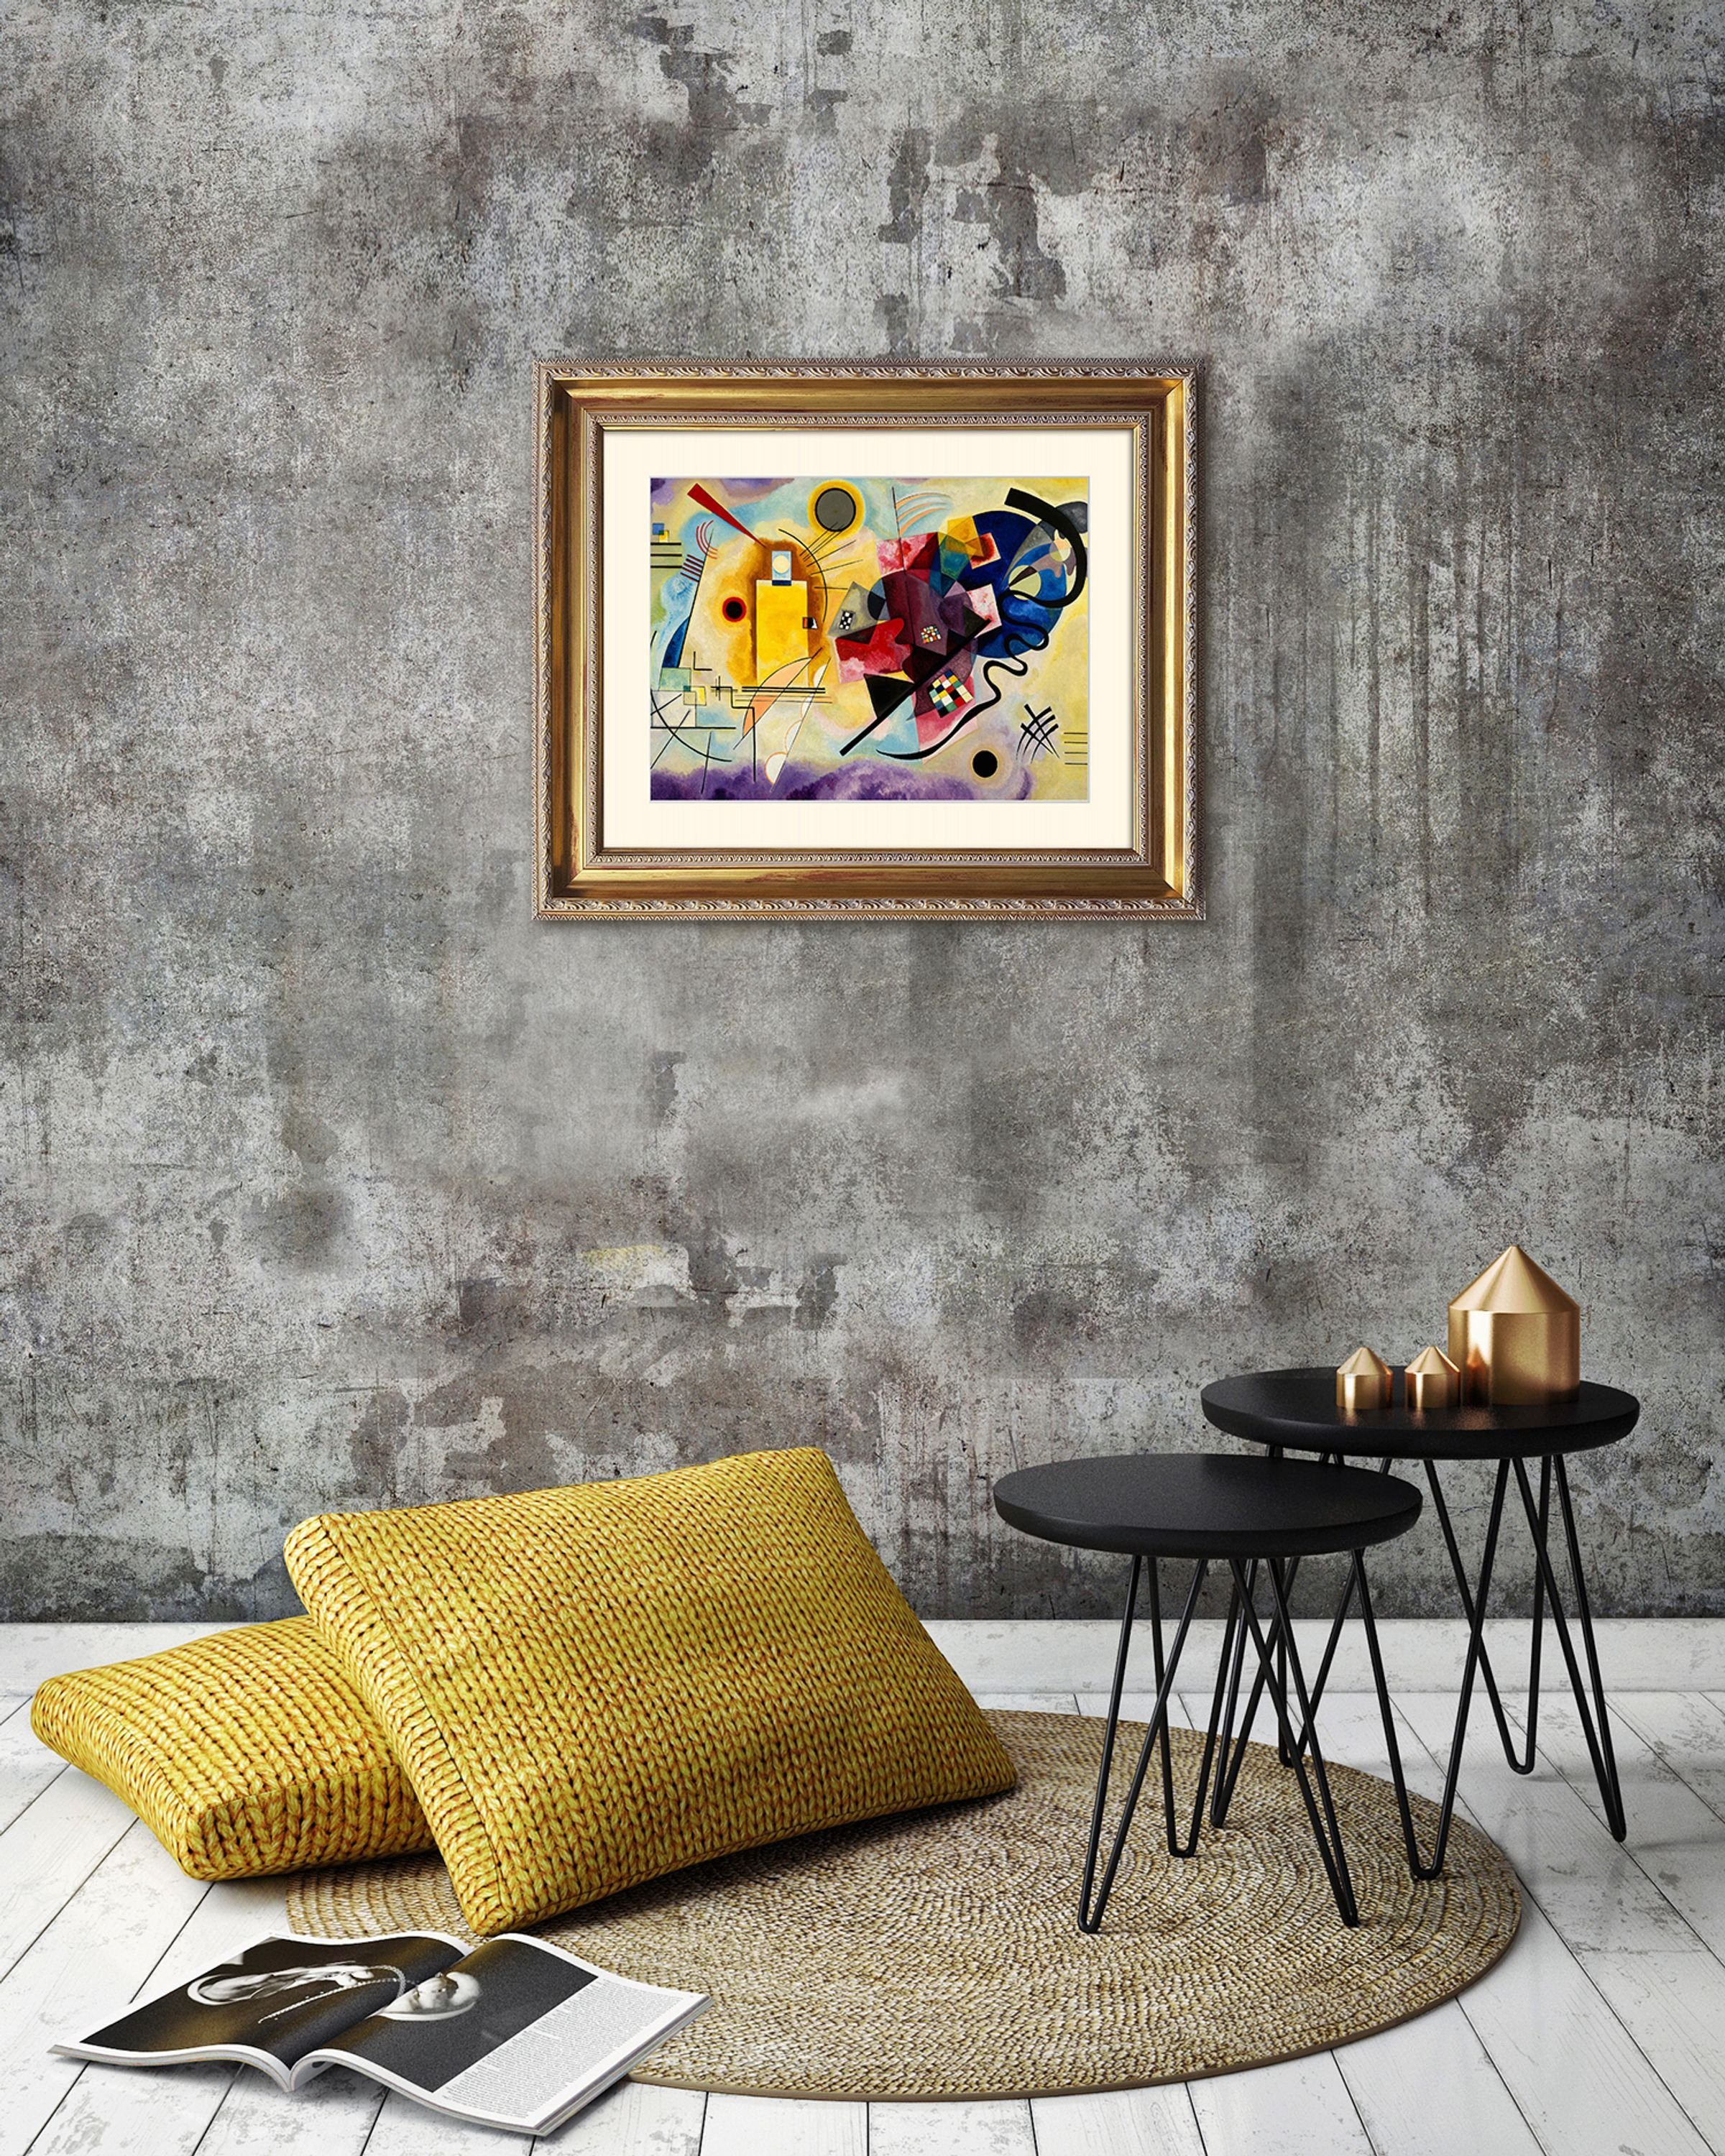 Red mit Rahmen Bild / Blue Barock-Rahmen artissimo 63x53cm Wassily and Poster mit Kandinsky: Kandinsky Wandbild, Bild / Yellow, erahmt